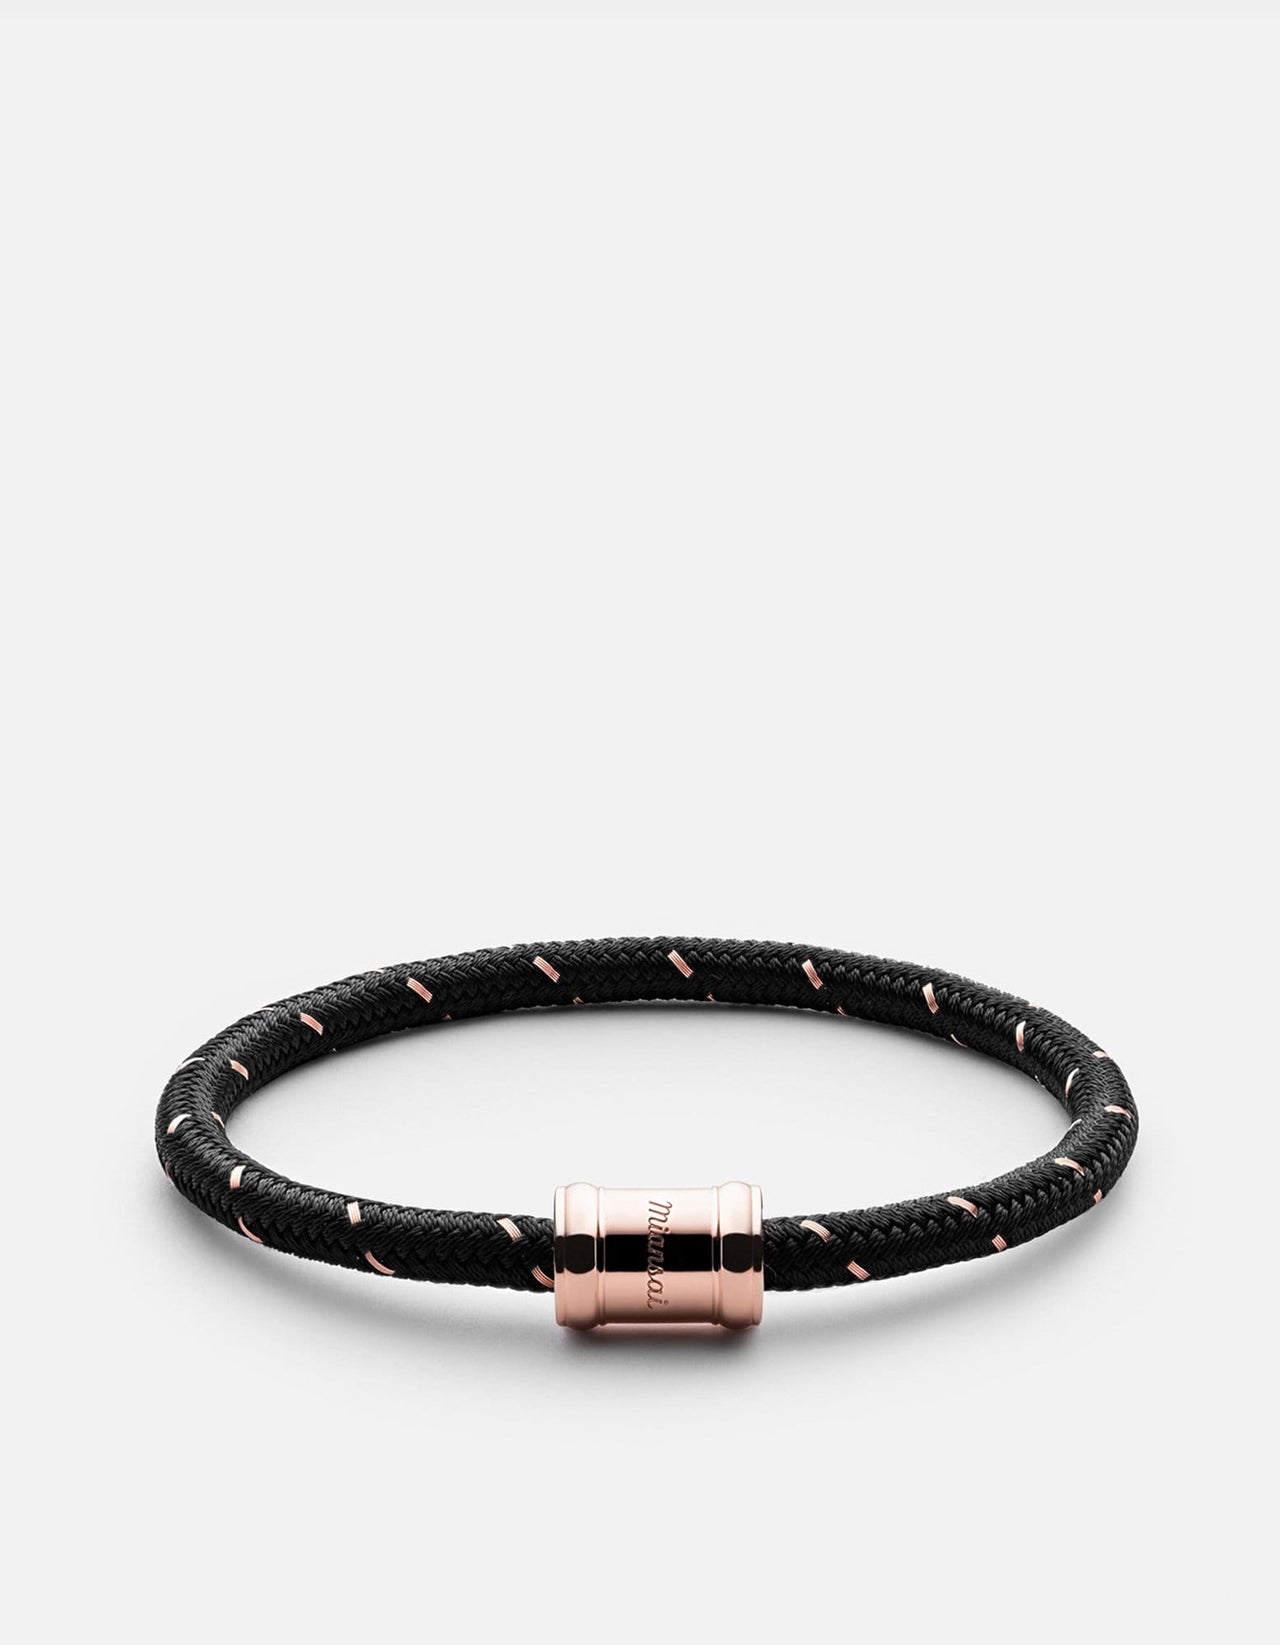 Louis Vuitton Keep It Bracelet (Black & Brown)